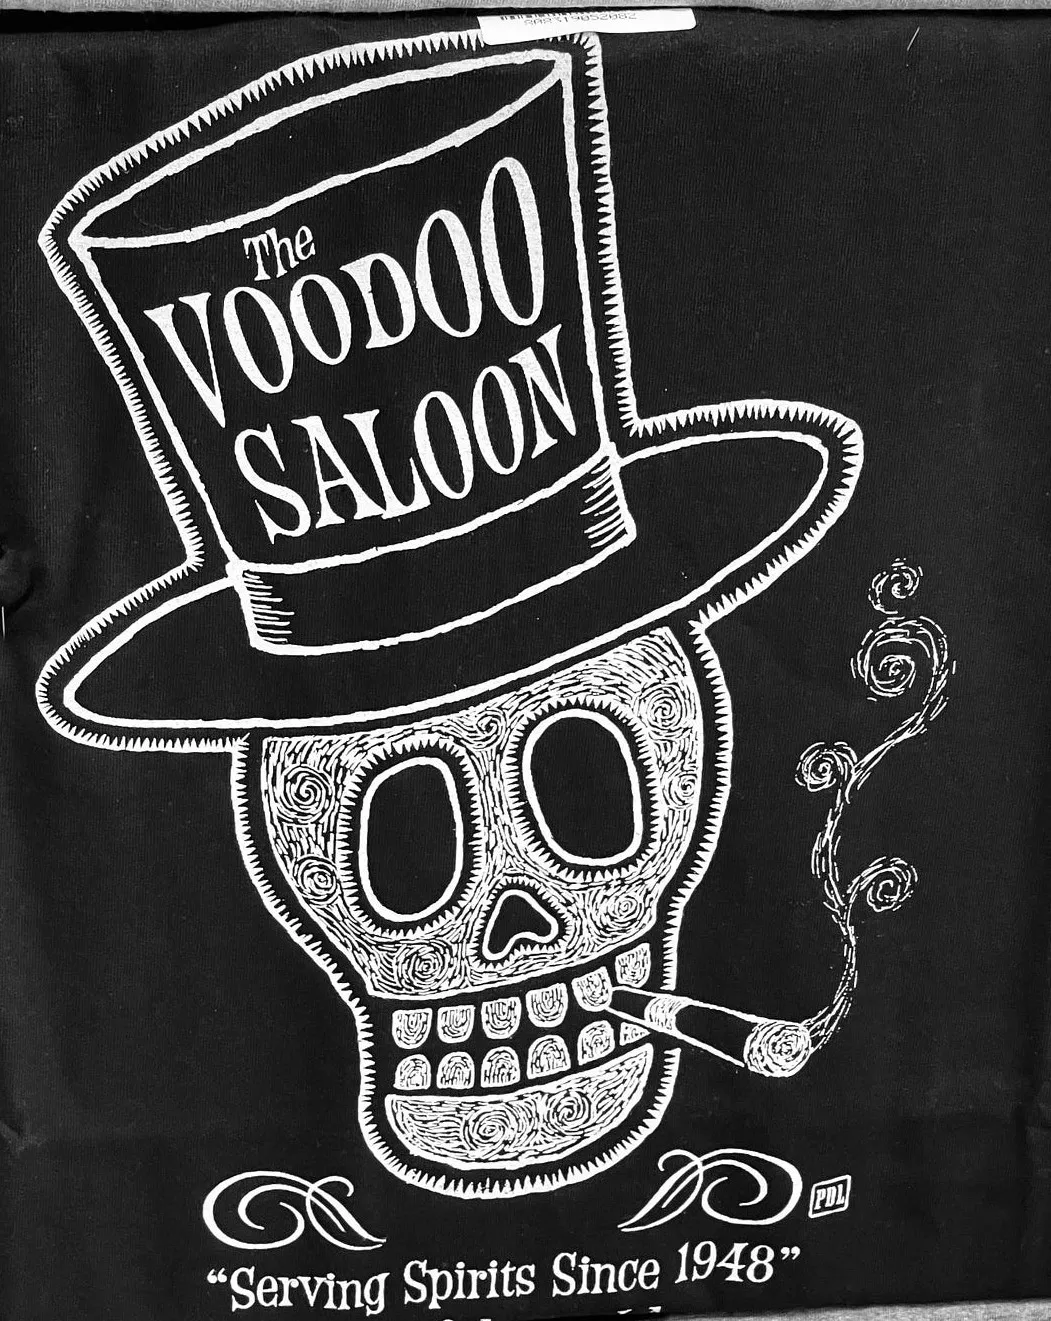 Skull with words “Voodoo Saloon” written across it. The saloon’s tagline: Serving spirits since 1948.